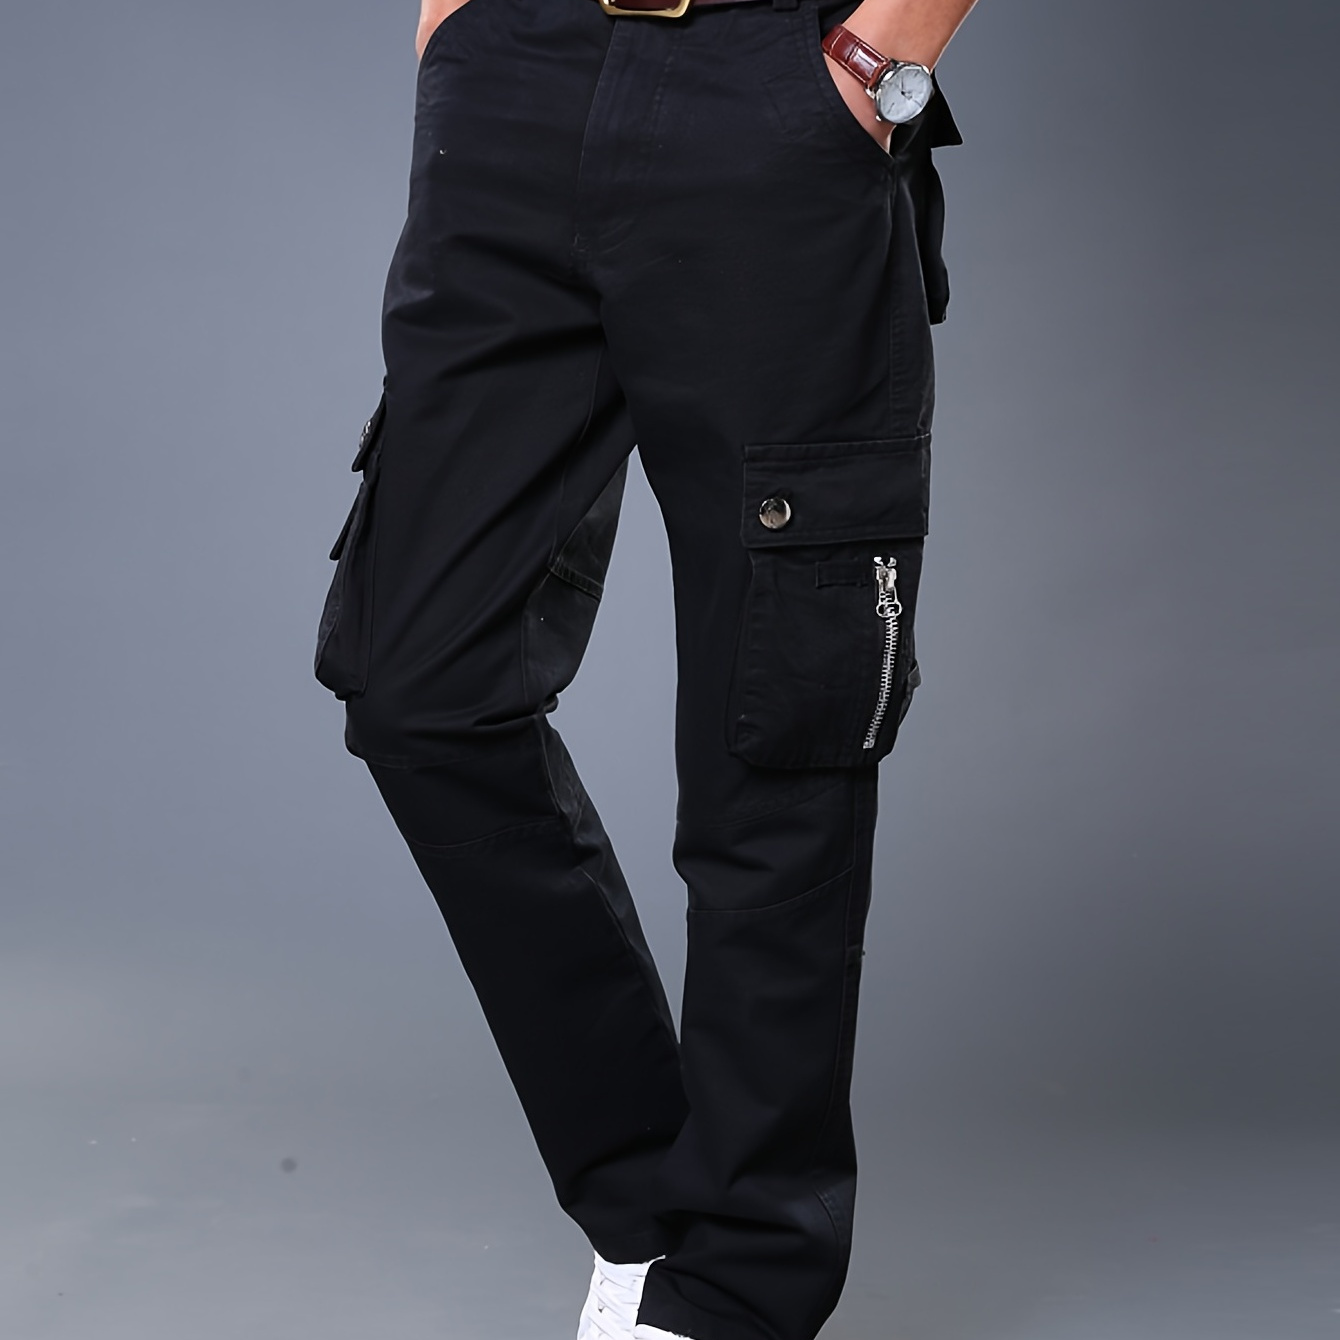 Shop BLACKTAILOR Unisex Street Style Cotton Military Cargo Pants C50 CARGO  black by ClassyVision  BUYMA